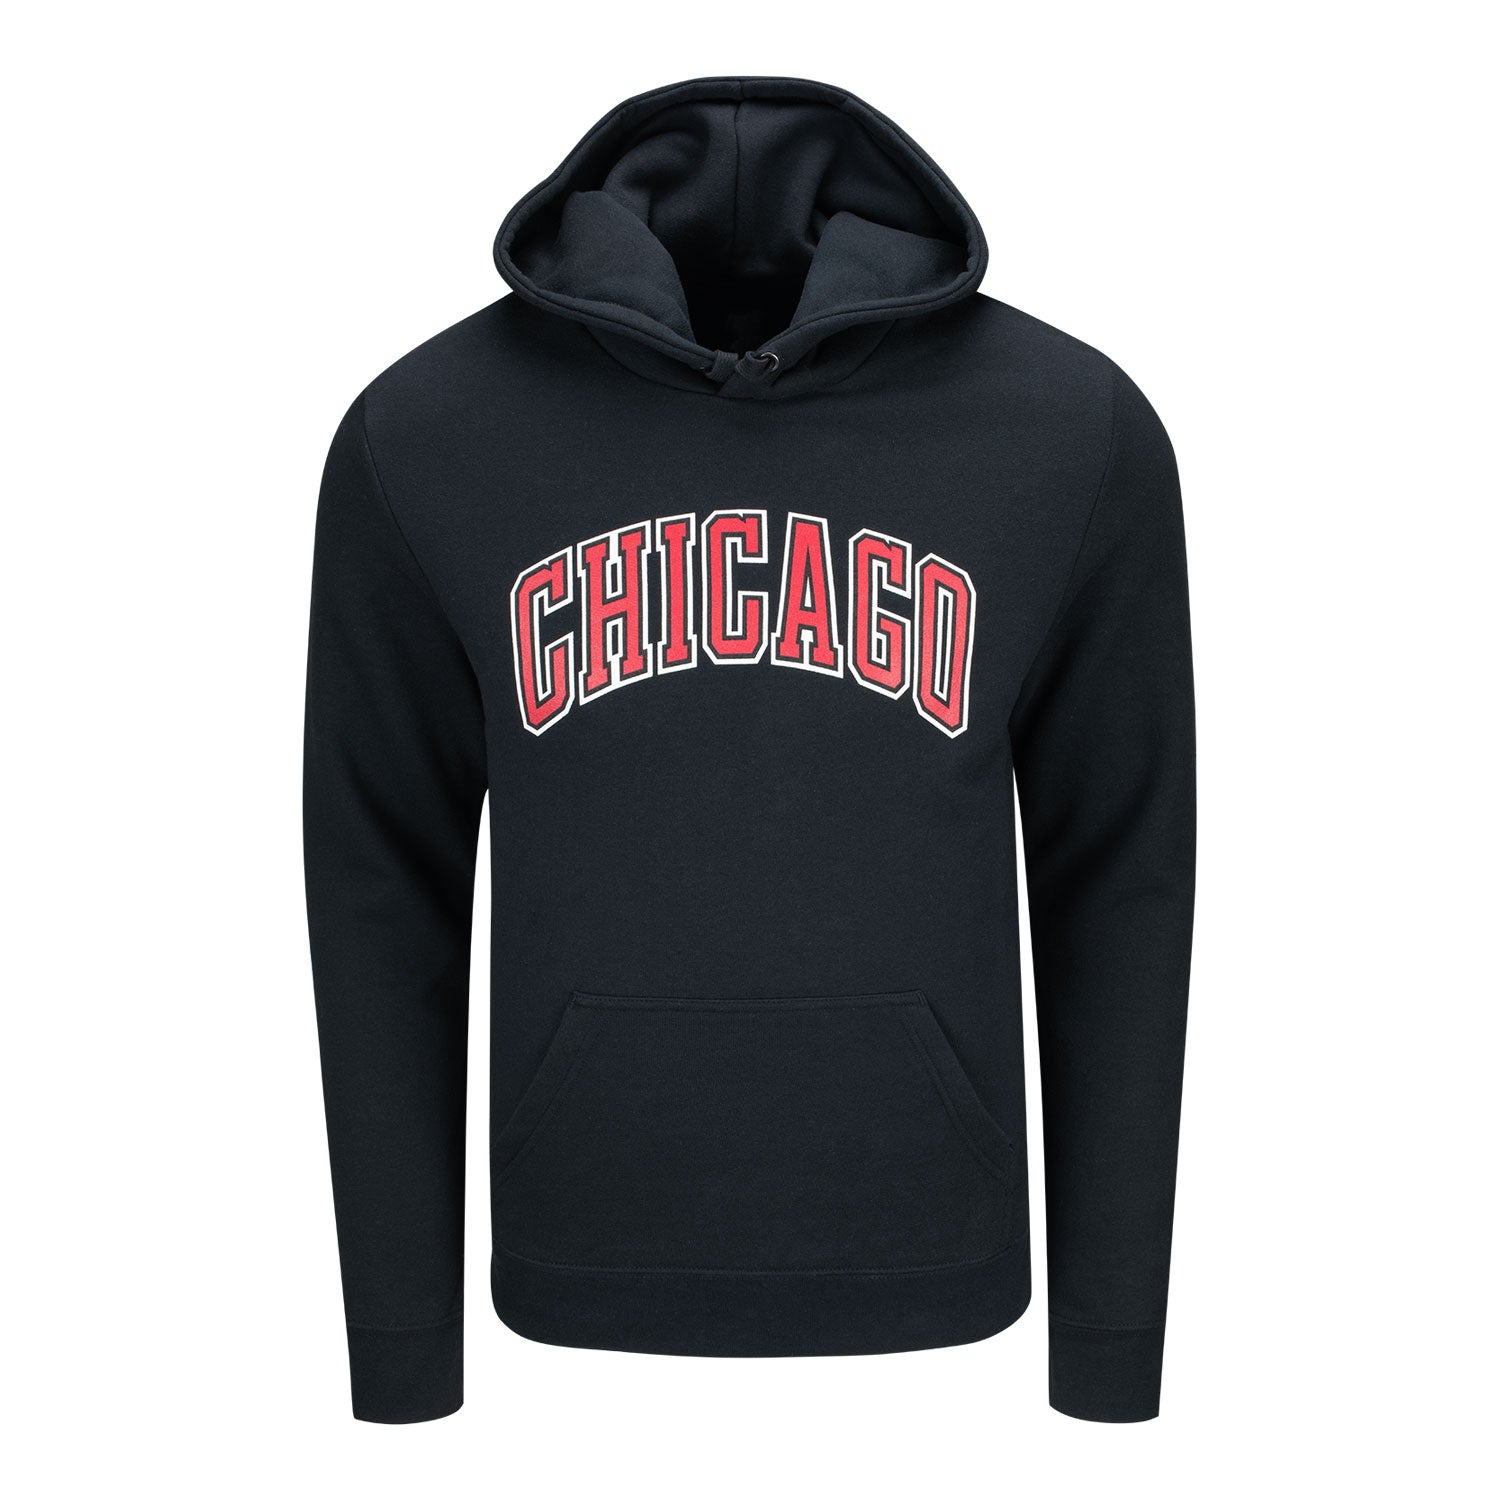 Chicago Bulls Fanatics Alternative Logo Hooded Sweatshirt - front view